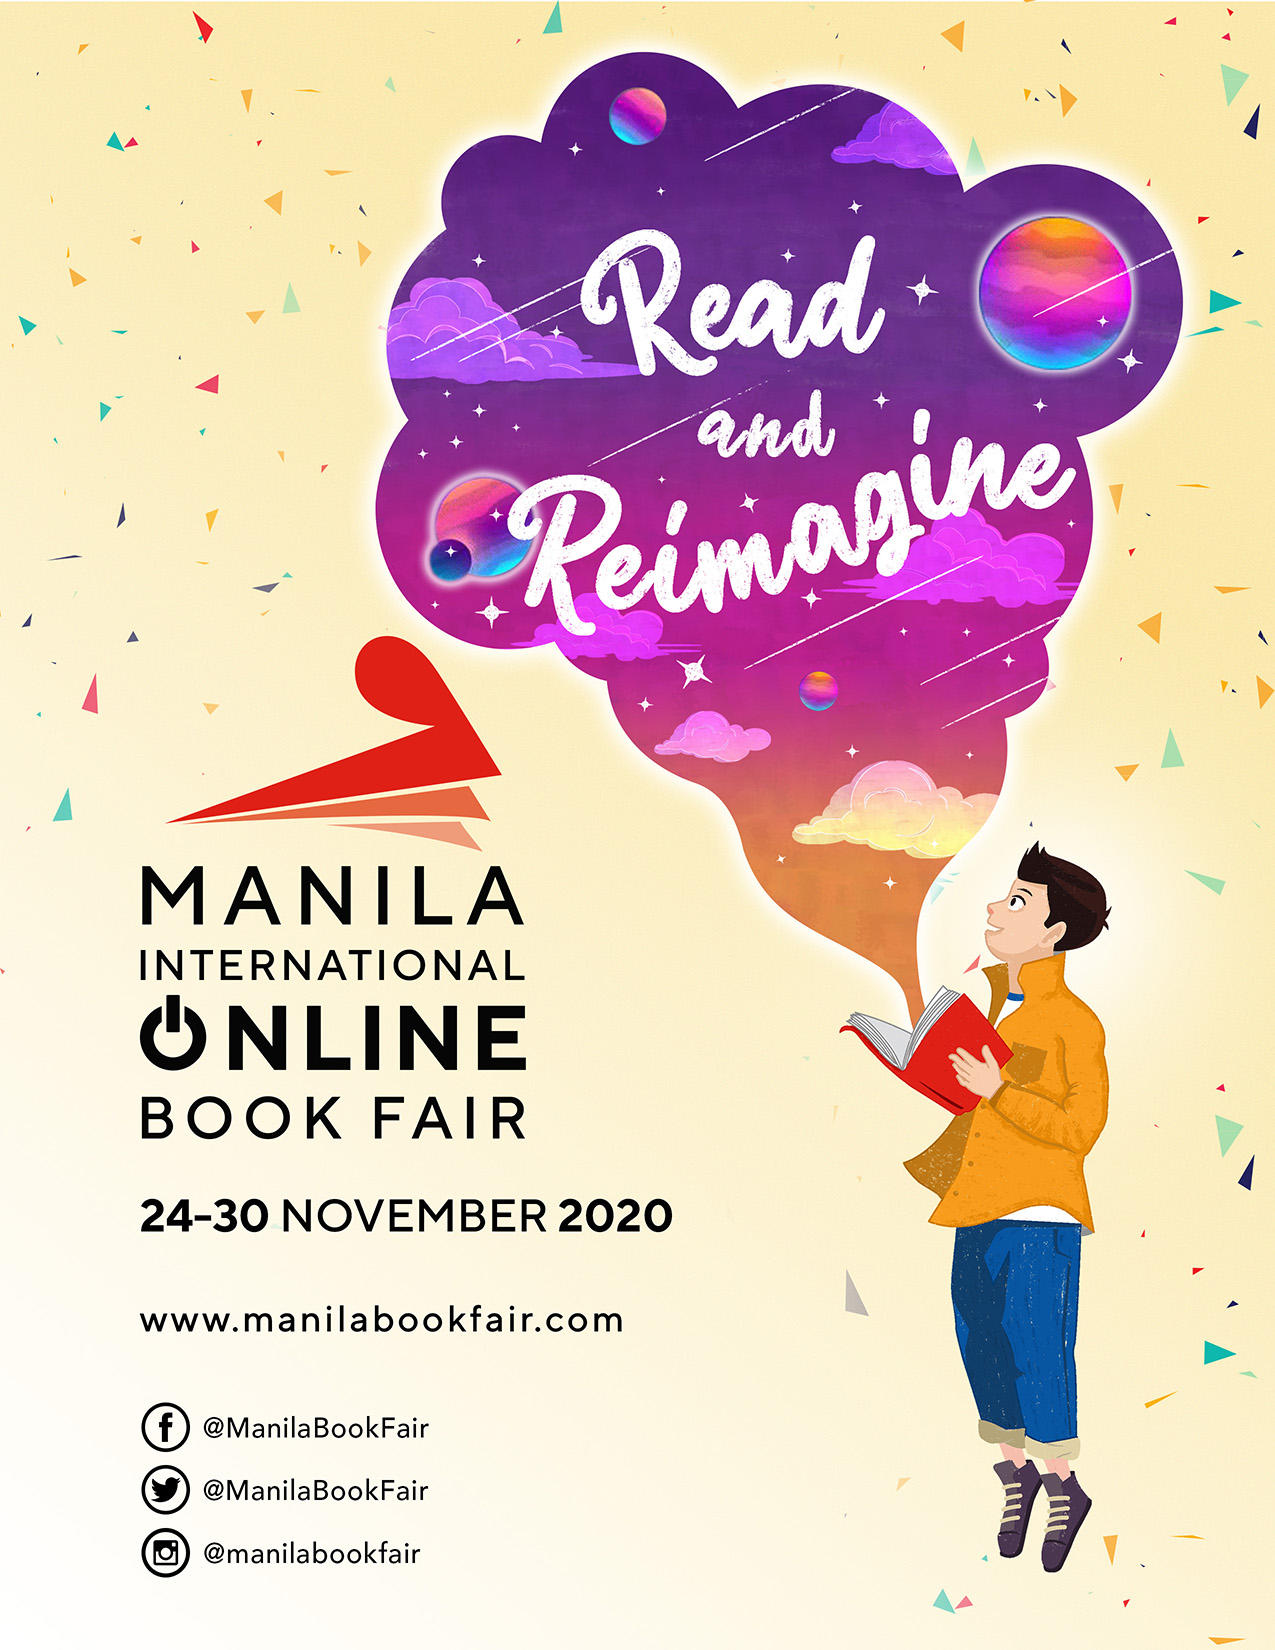 Manila International Book Fair 2020 